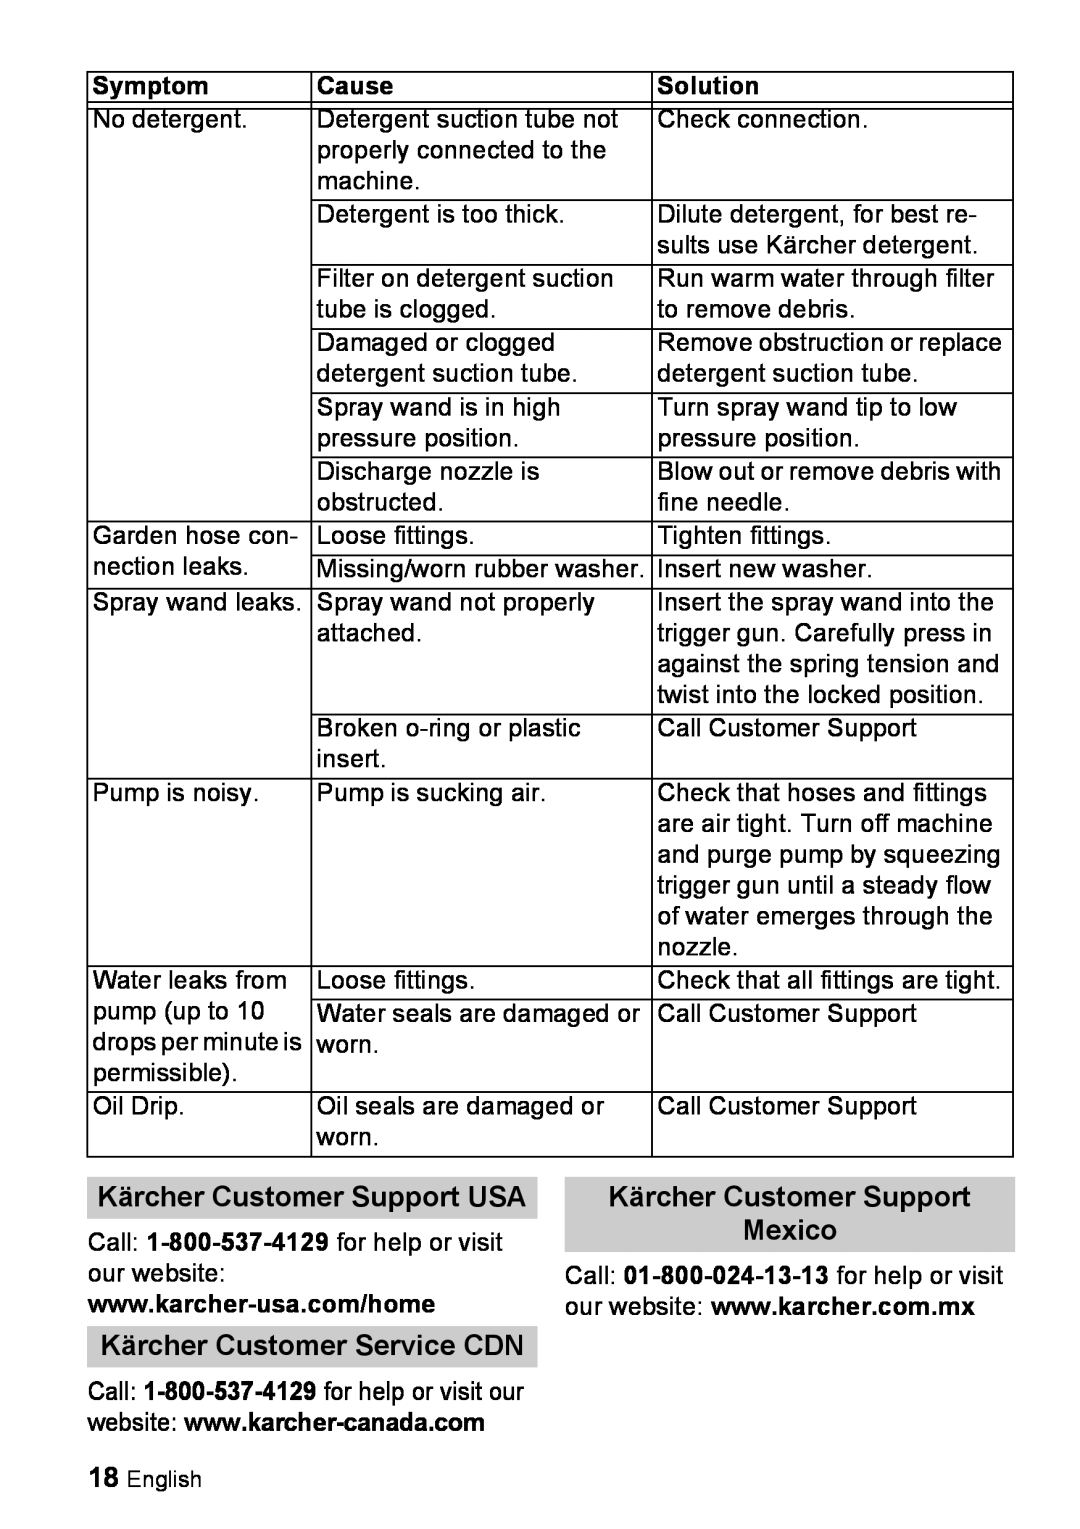 Karcher K 3.67 M manual Mexico, Symptom, Cause, Solution, Kärcher Customer Support USA, Kärcher Customer Service CDN 